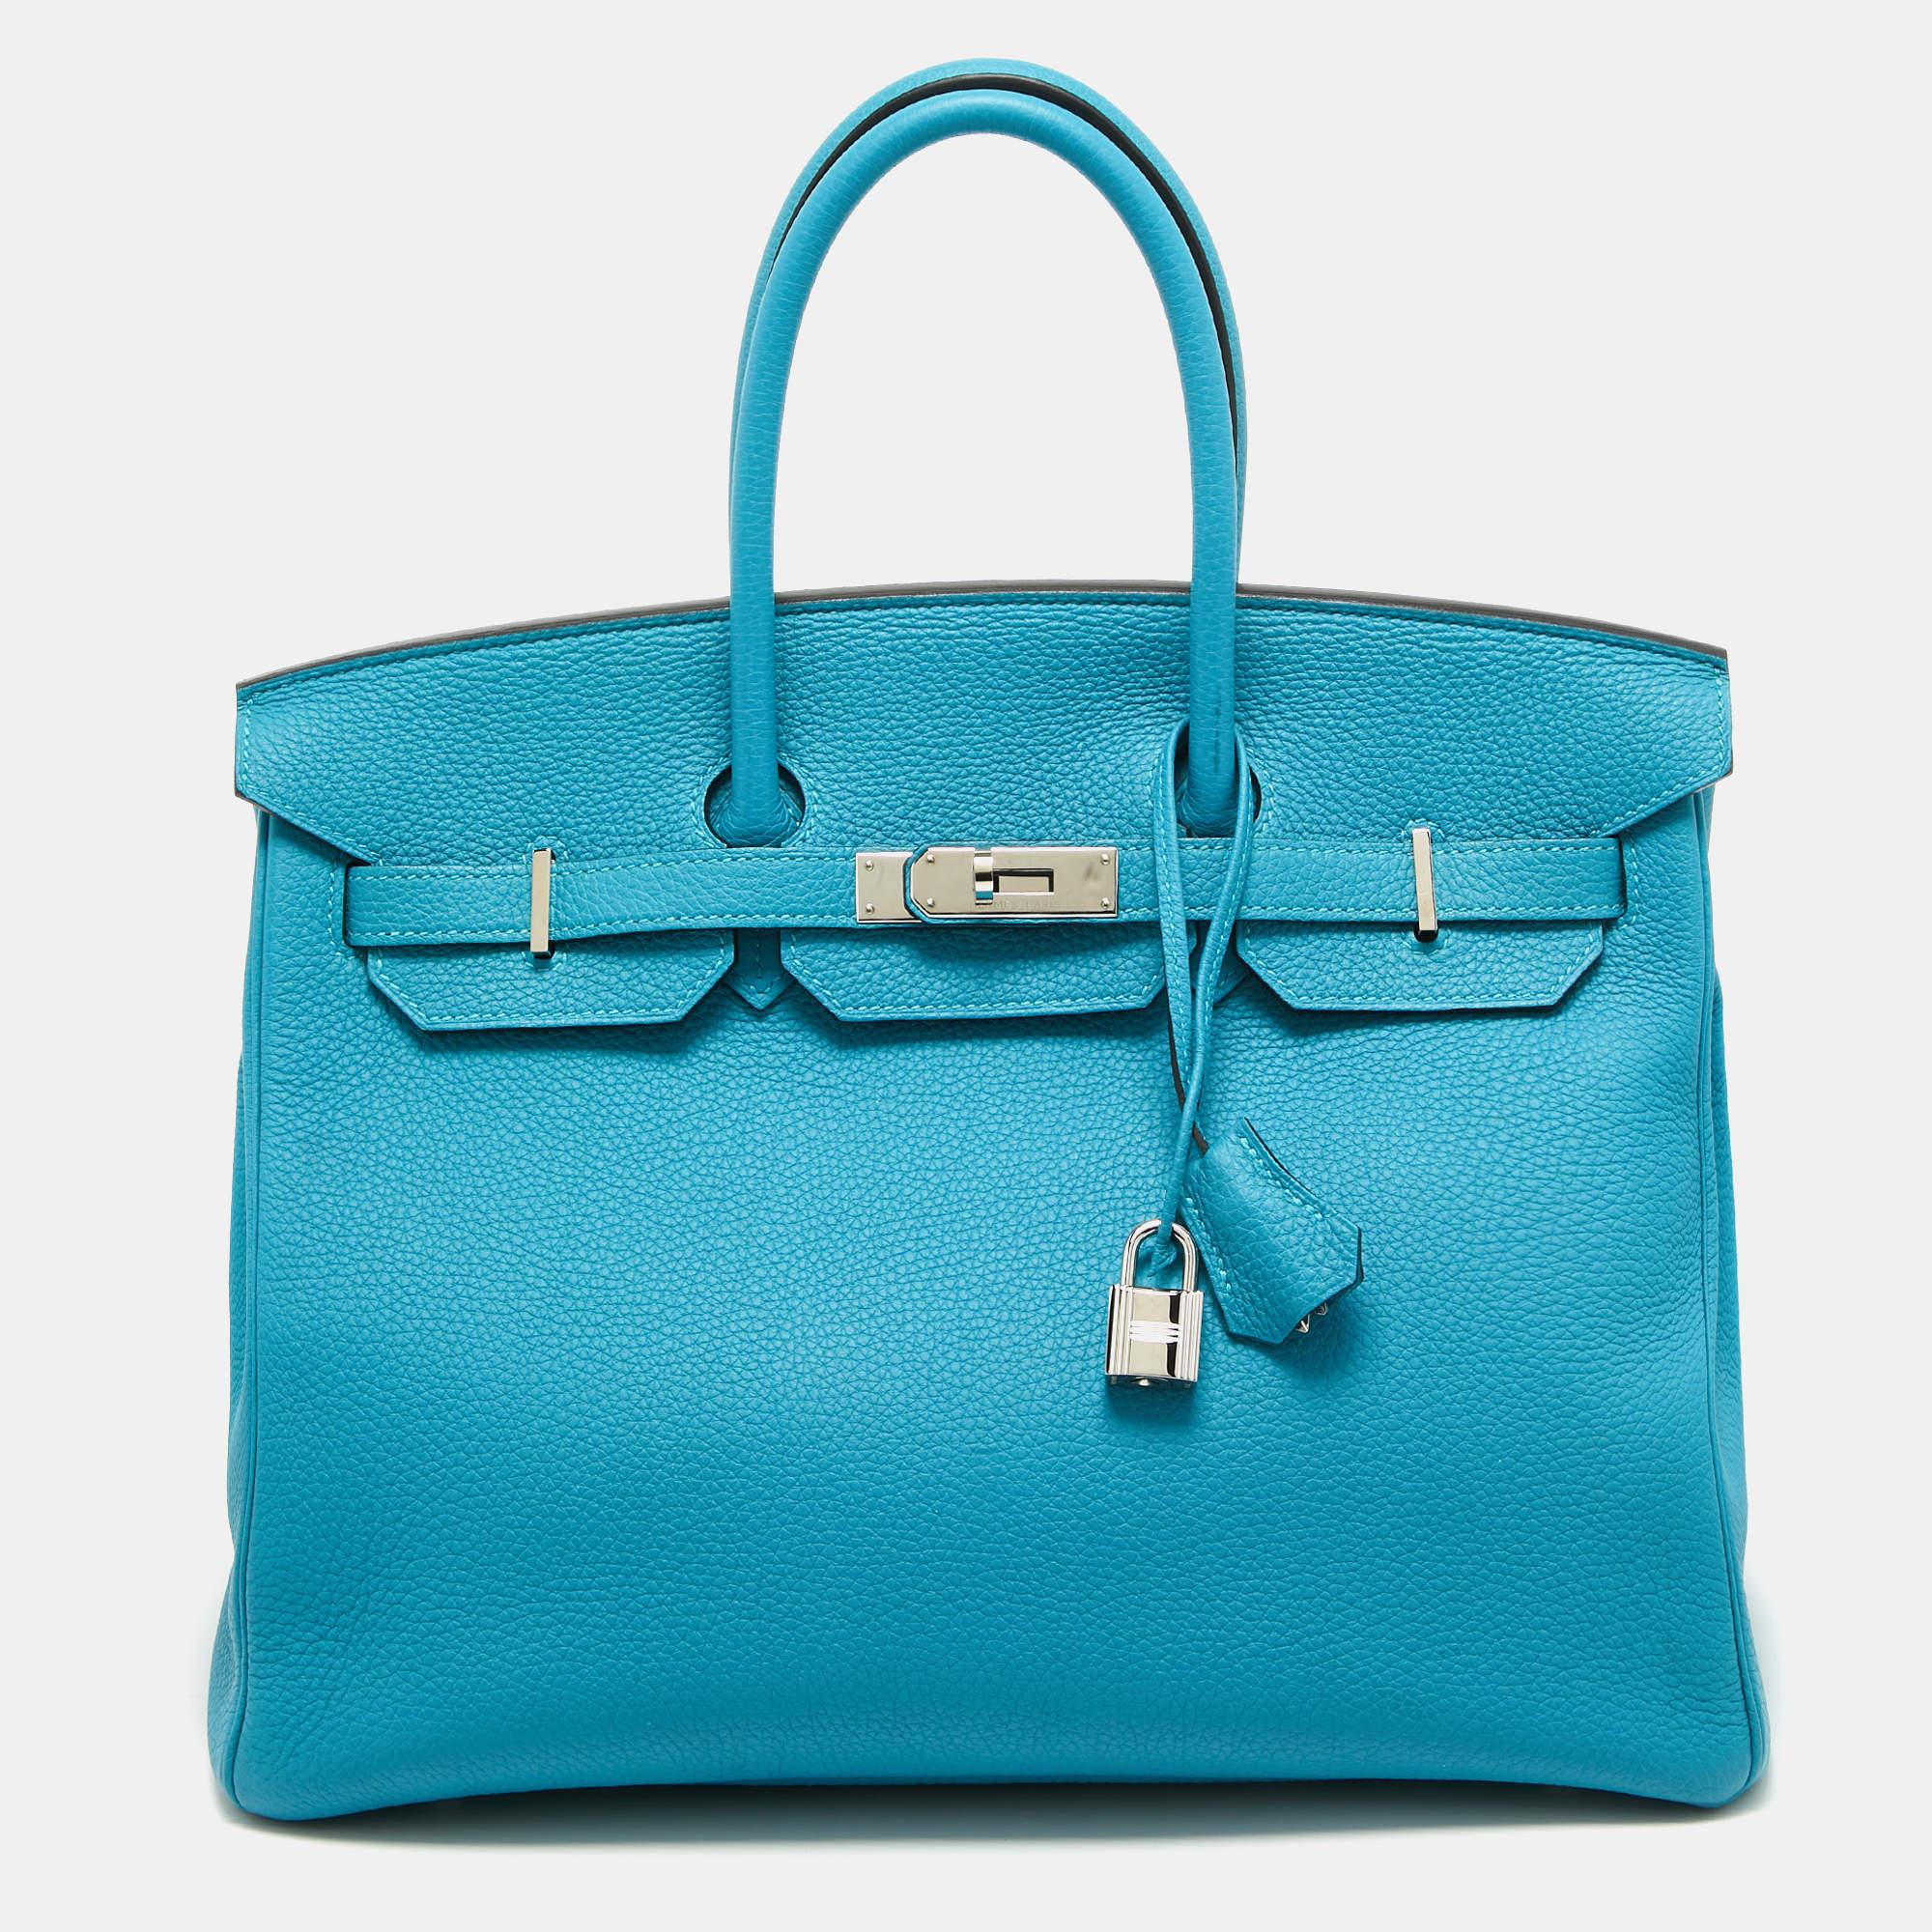 Hermes Turquoise Blue Togo Leather Palladium Finish Birkin 35 Bag For Sale 10